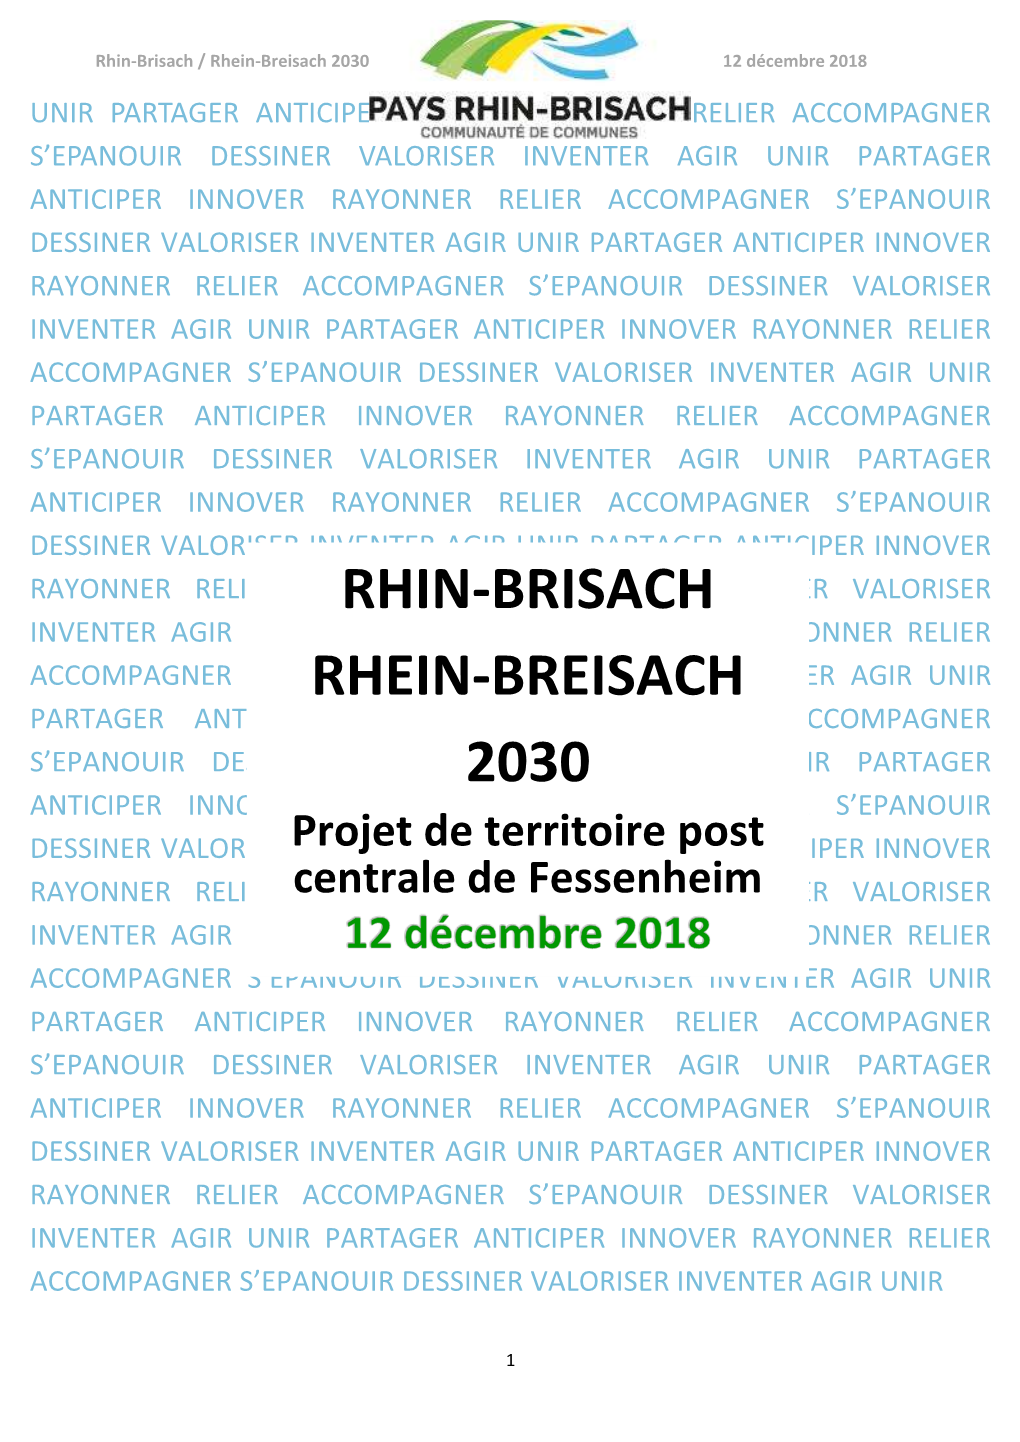 RHIN-BRISACH RHEIN-BREISACH 2030 Projet De Territoire Post Centrale De Fessenheim